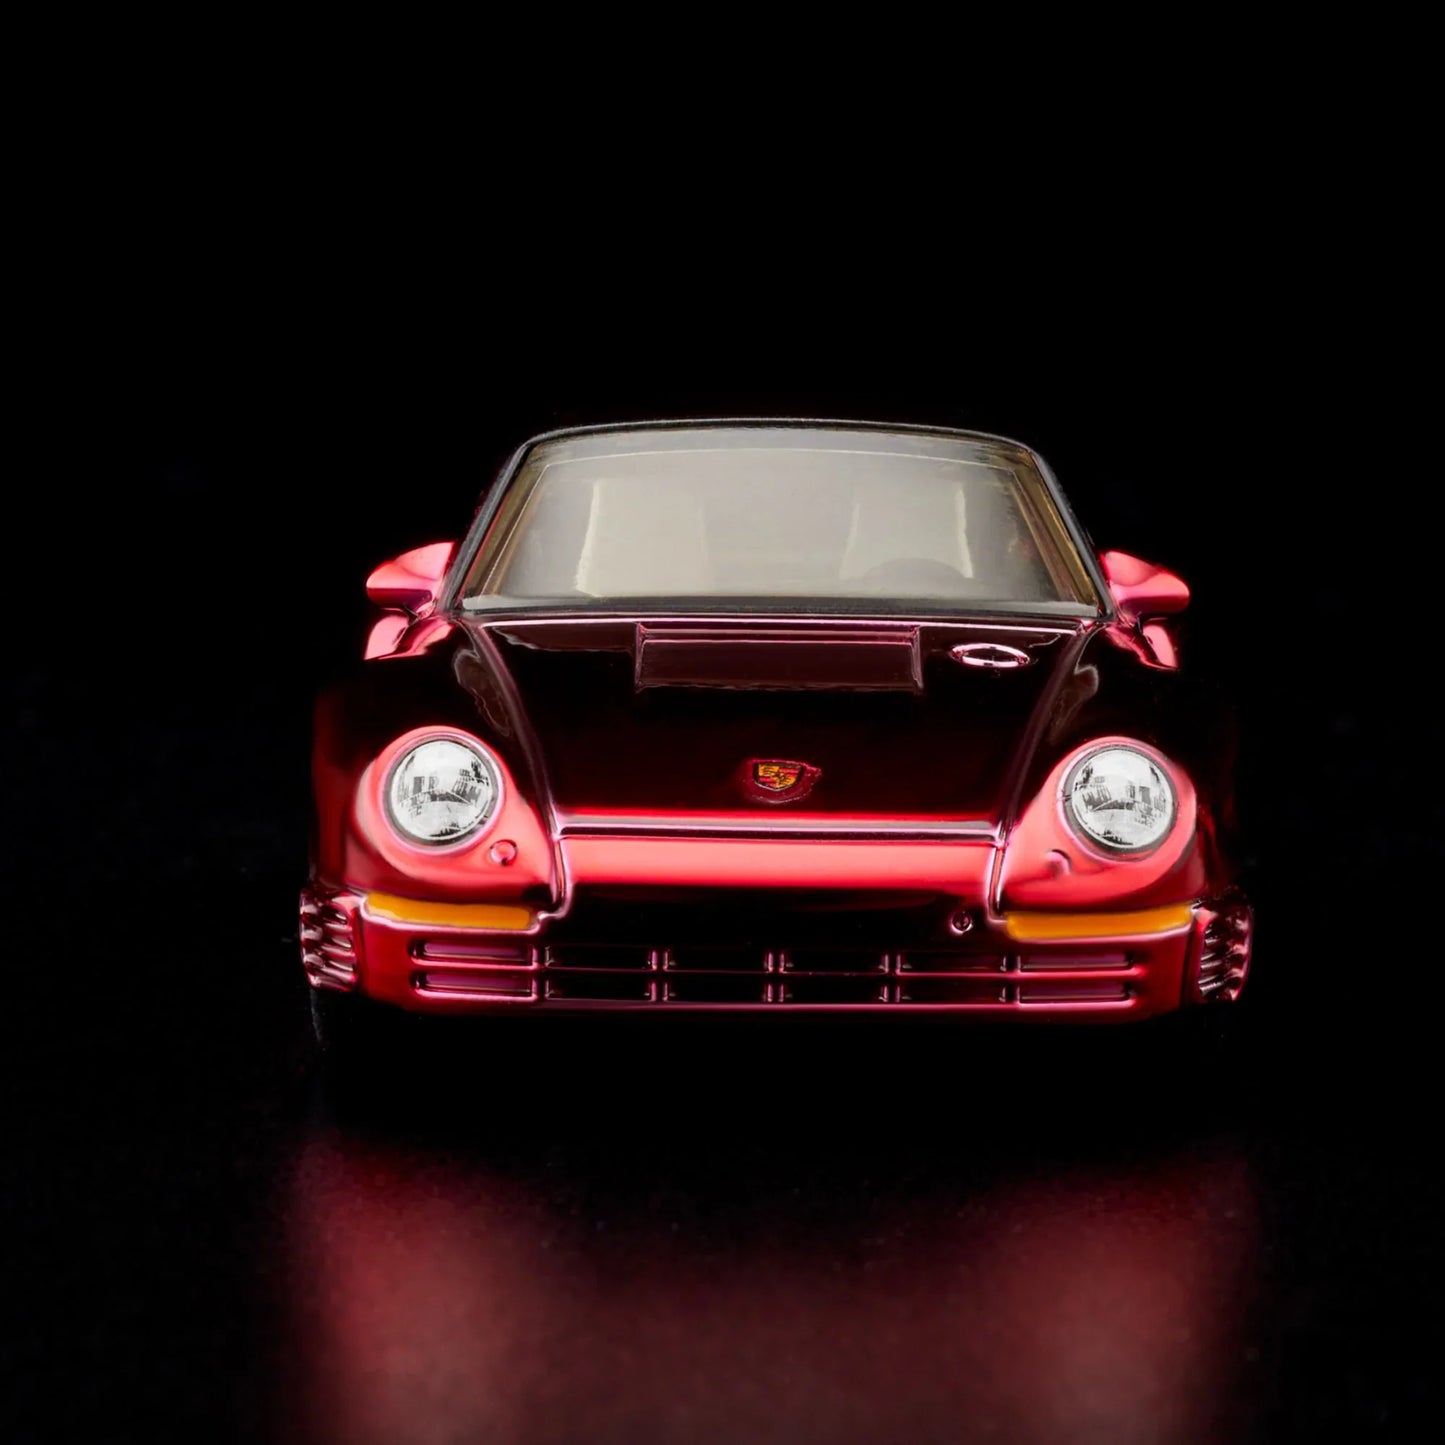 Mattel Creations: Hot Wheels Collectors - RLC Exclusive 1986 Porsche 959